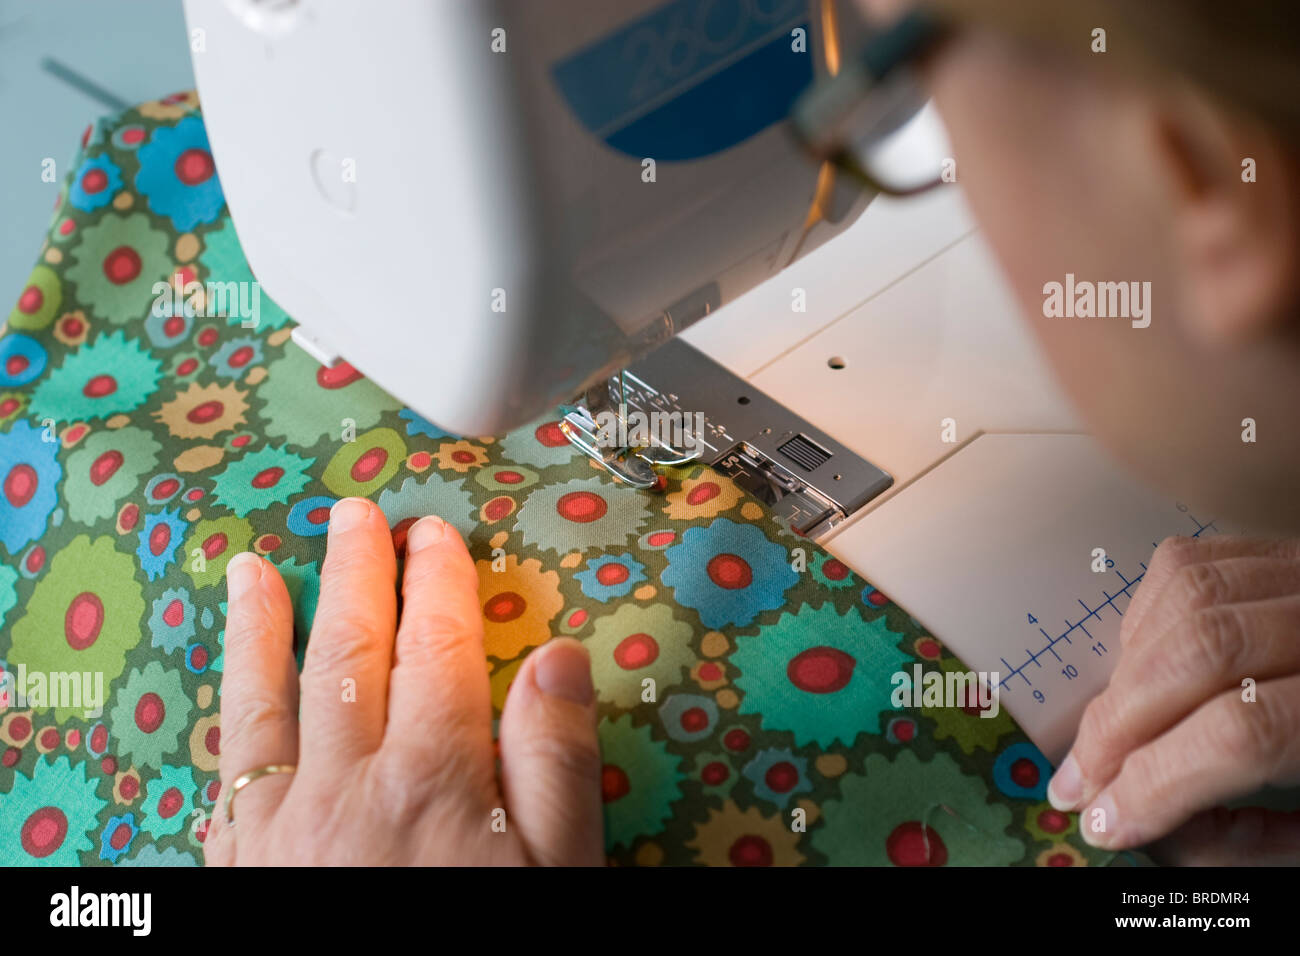 Costurera cosiendo a máquina de coser Foto de stock